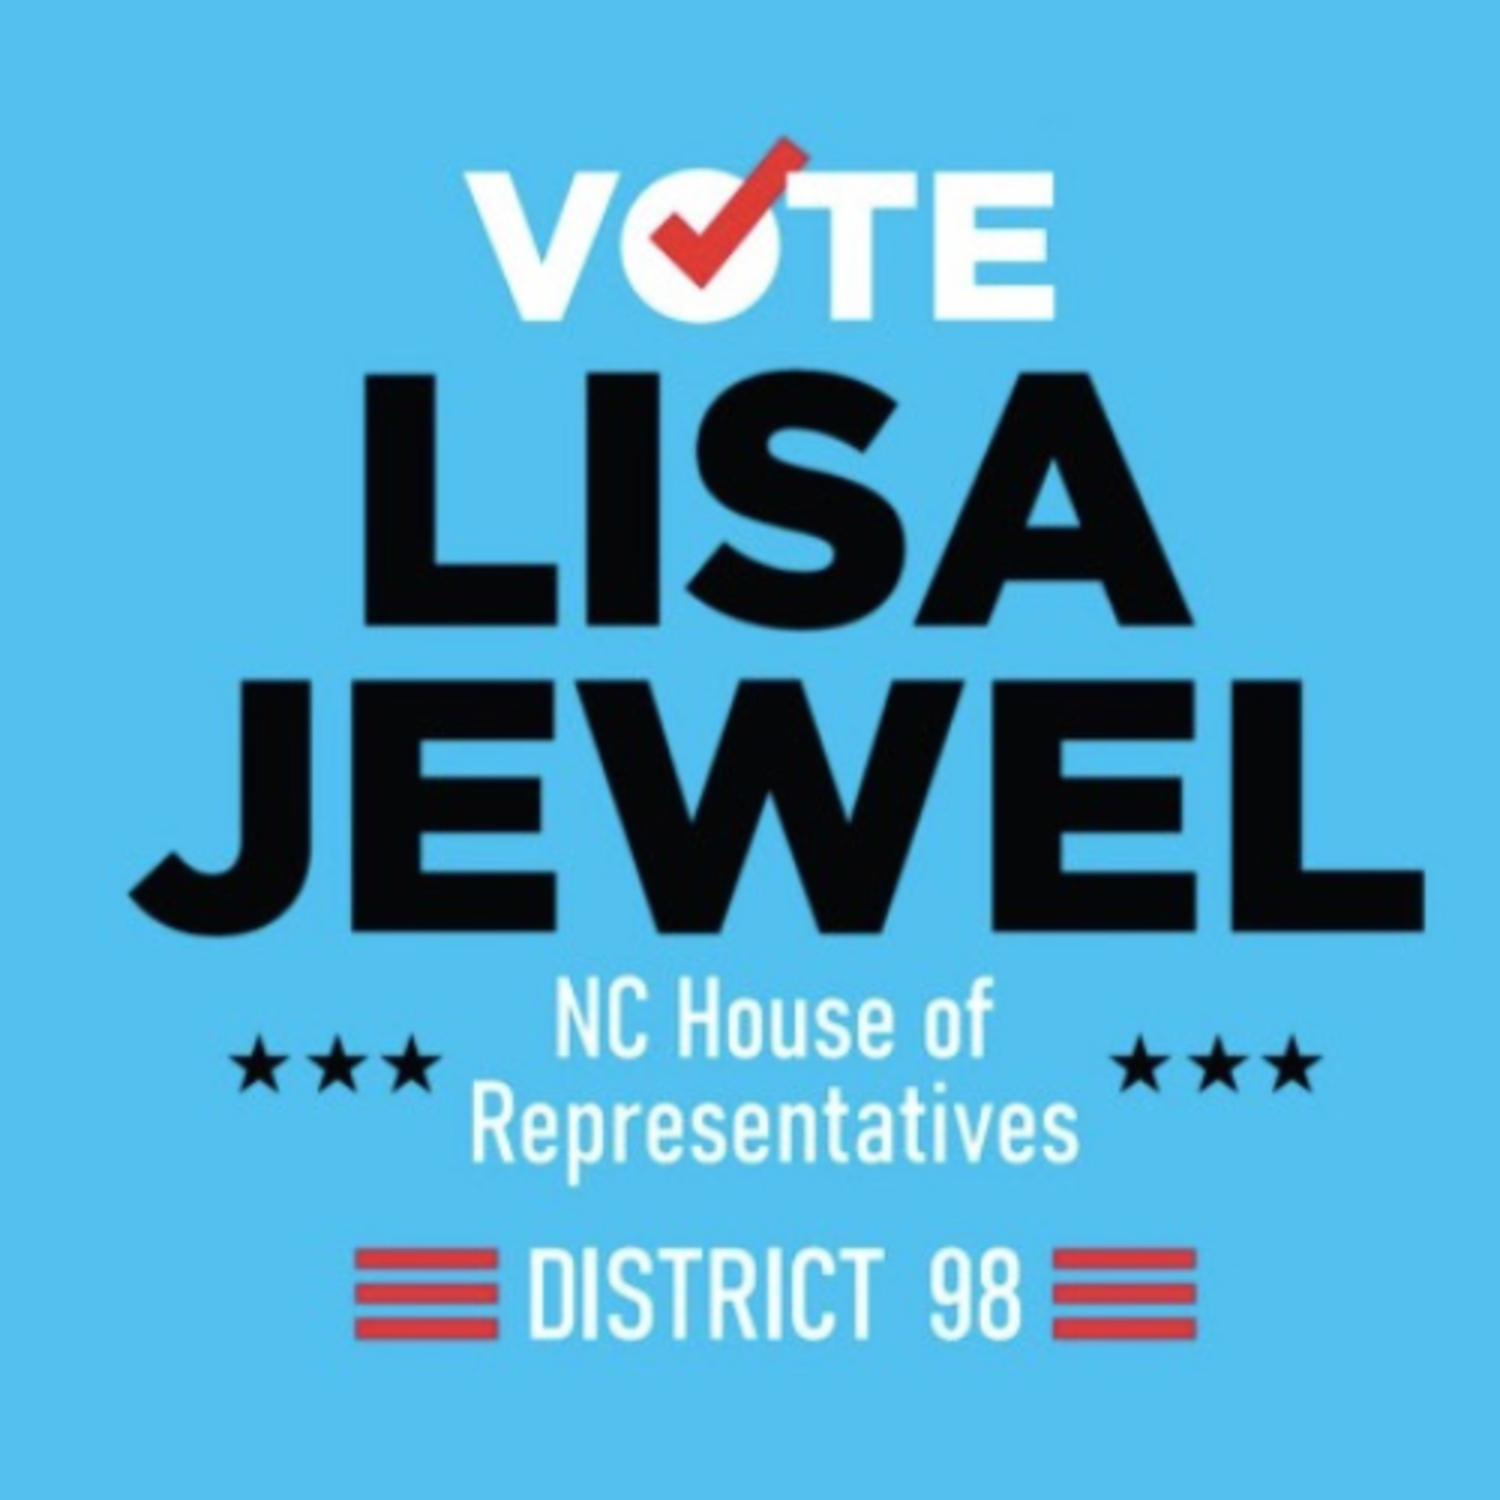 Vote Lisa Jewel - NC House of Representatives District 98